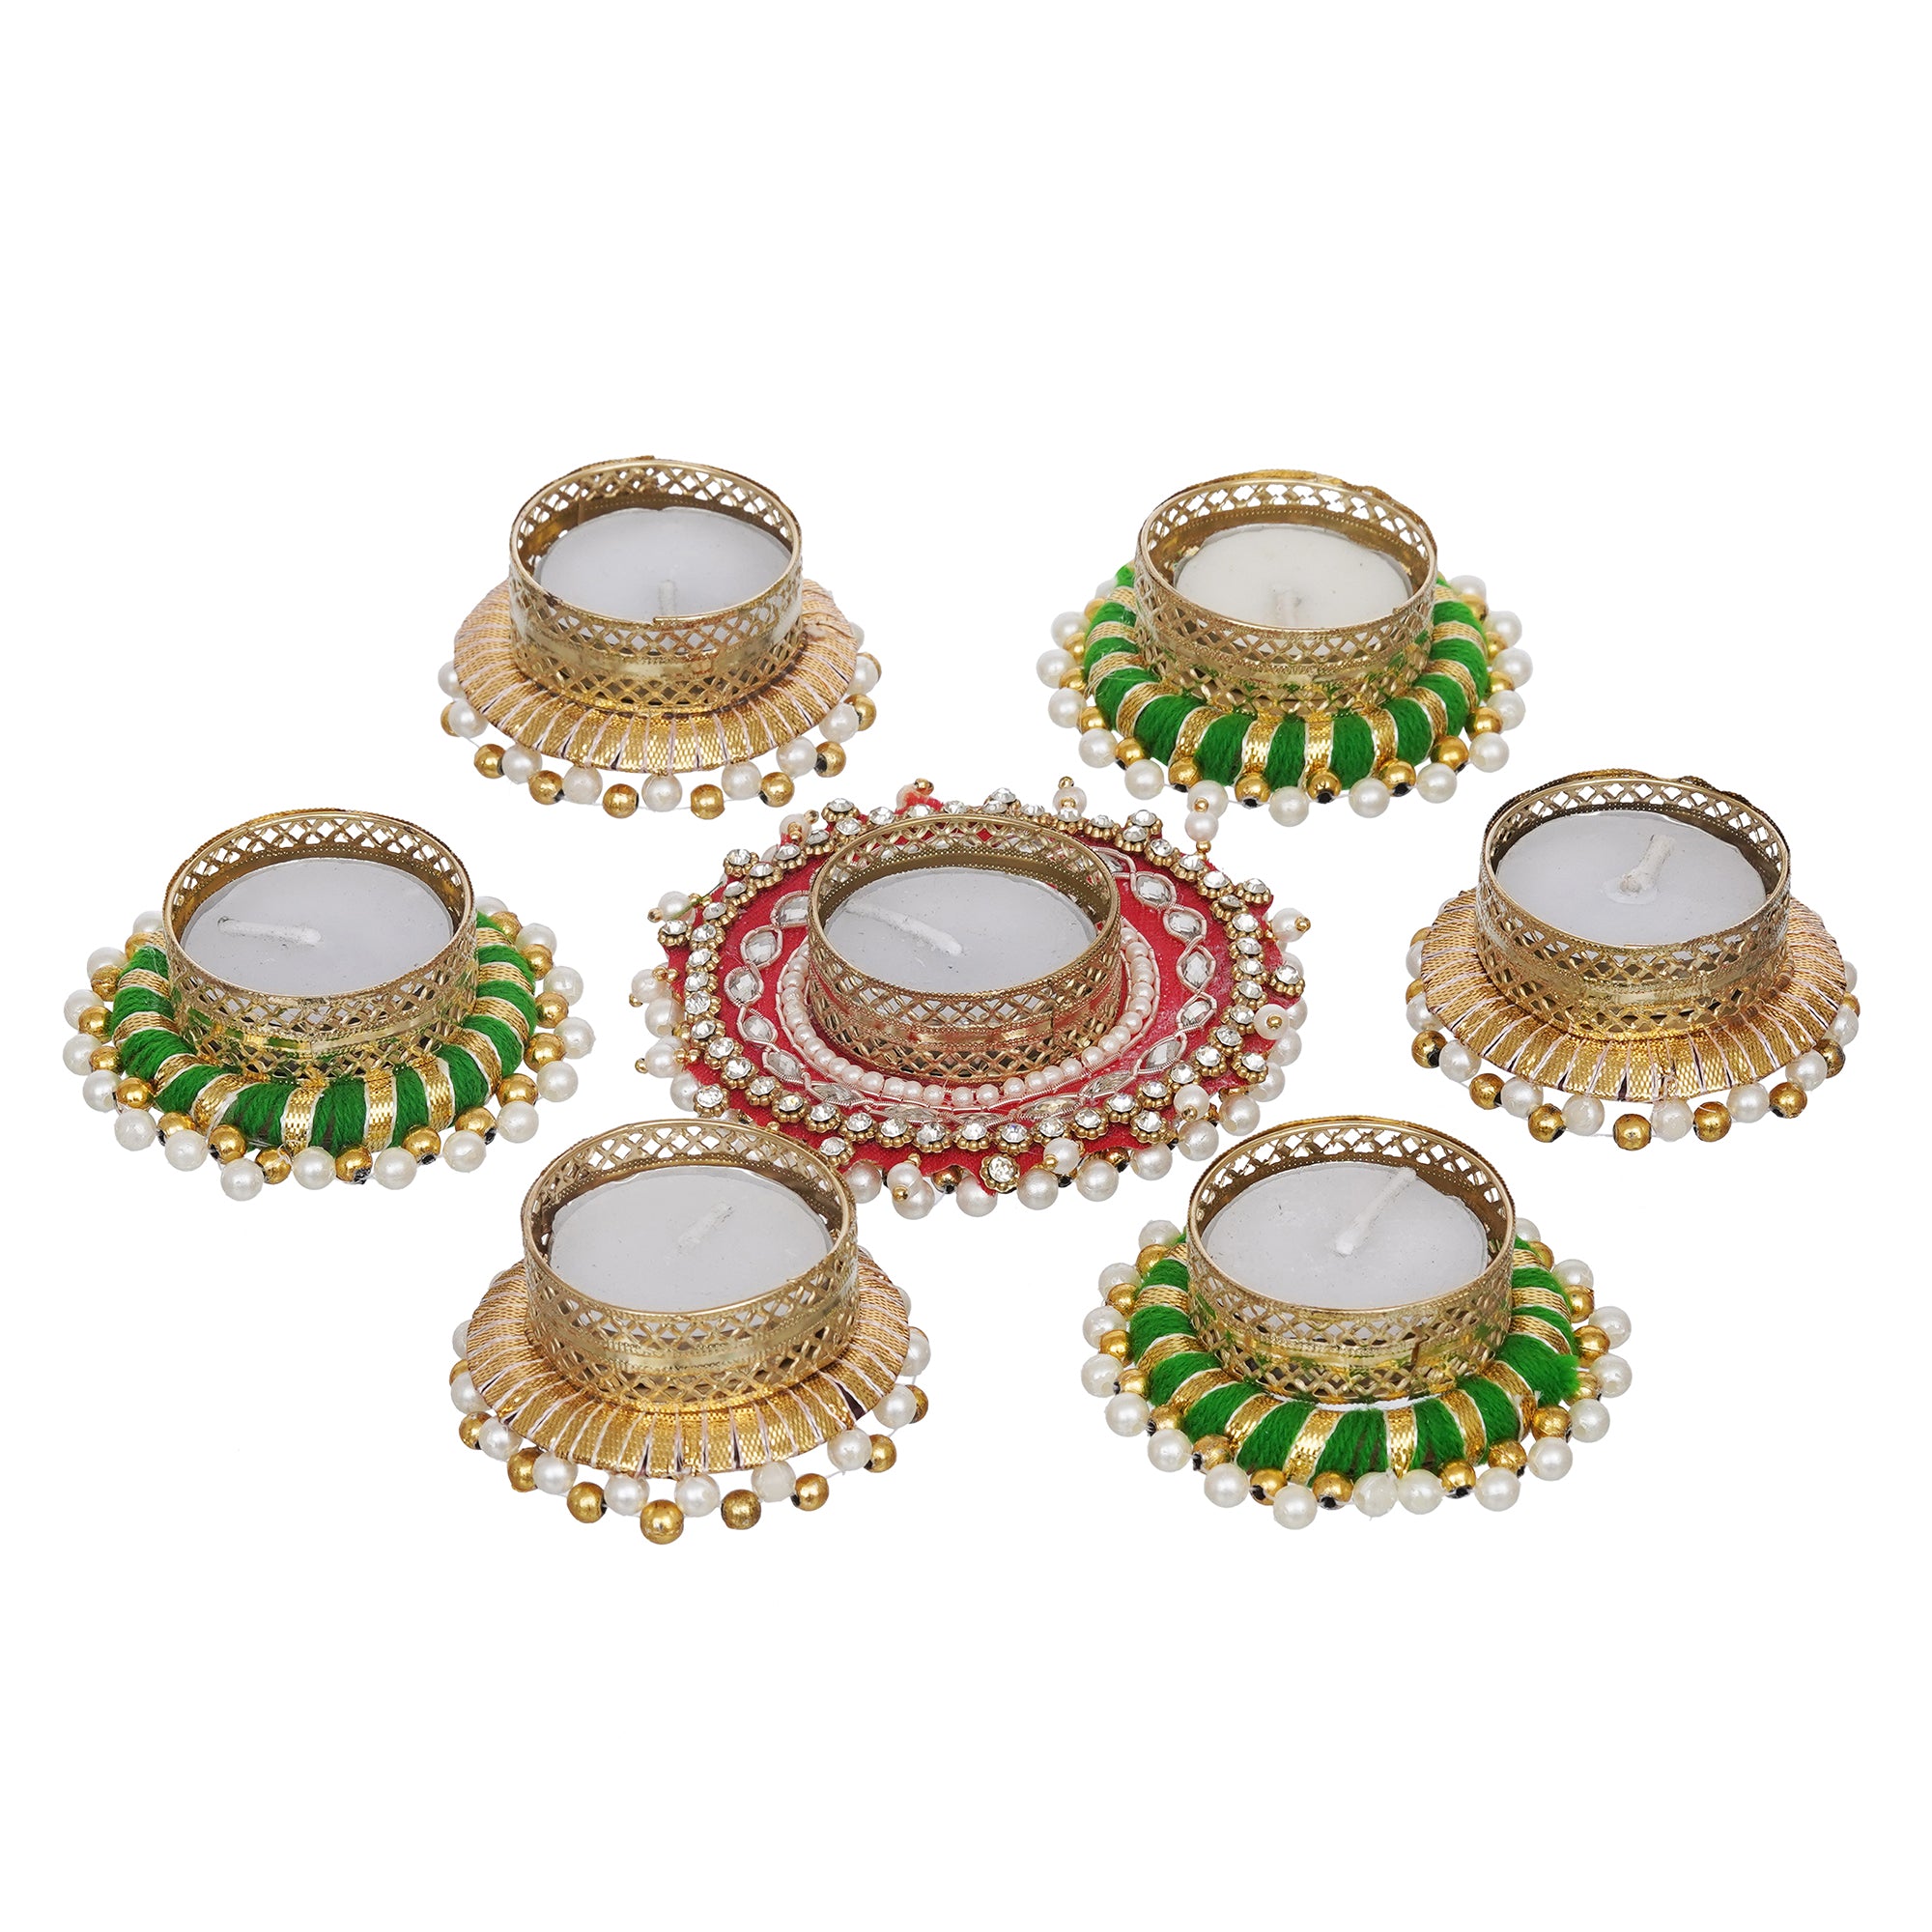 eCraftIndia Set of 7 Round Shaped Diamond Beads and Pearls Decorative Tea Light Candle Holders 7